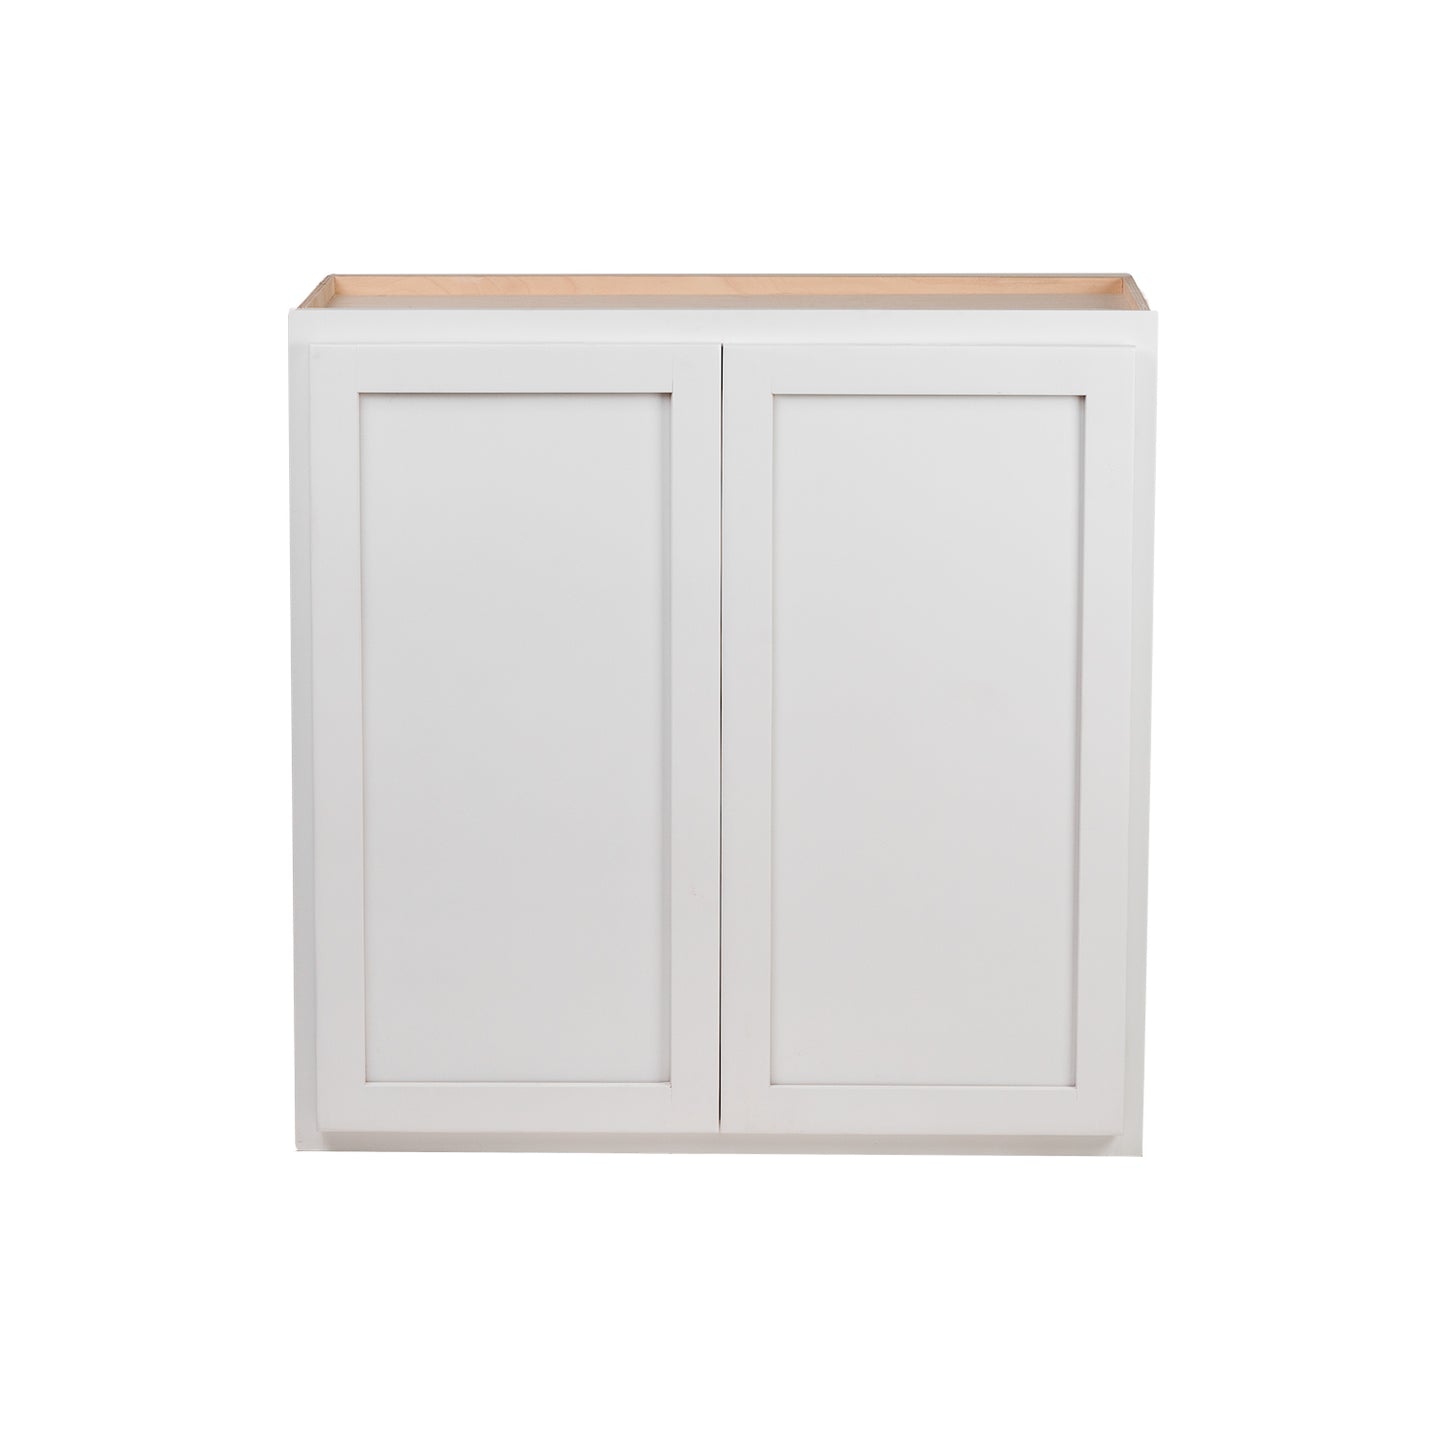 Quicklock RTA (Ready-to-Assemble) Pure White 36"Wx30"Hx12"D Wall Cabinet